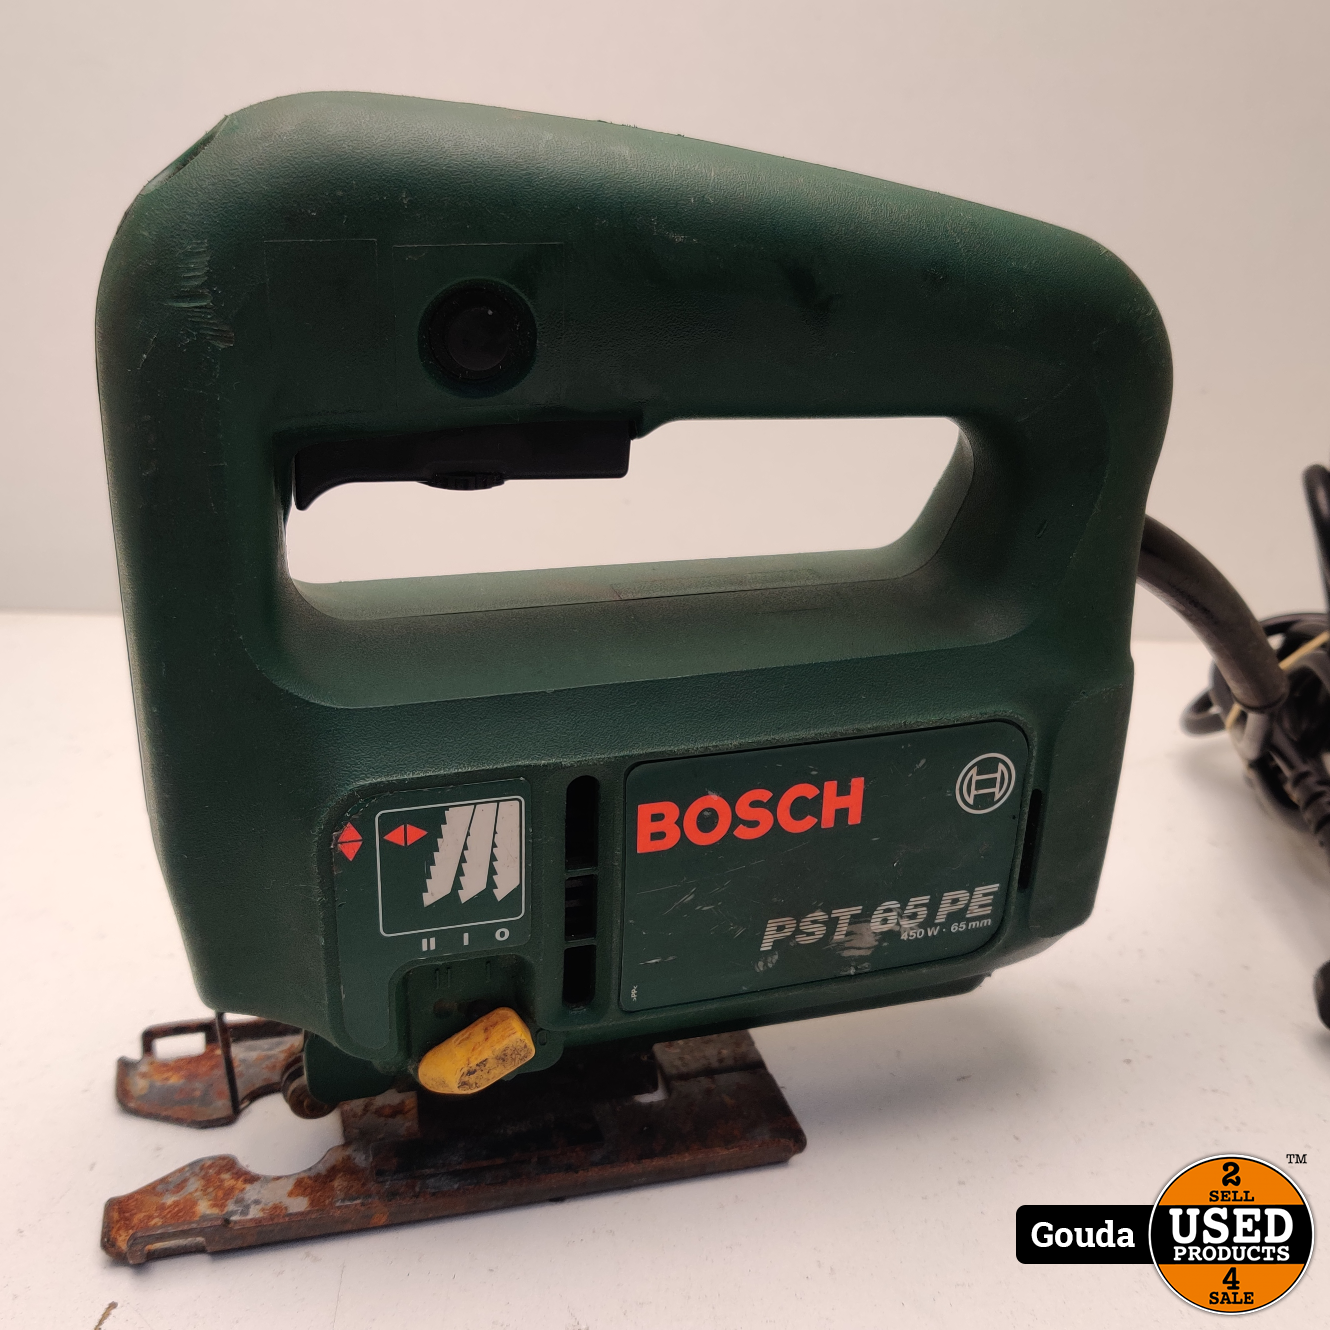 Bosch PST pe decoupeerzaag - Used Products Gouda